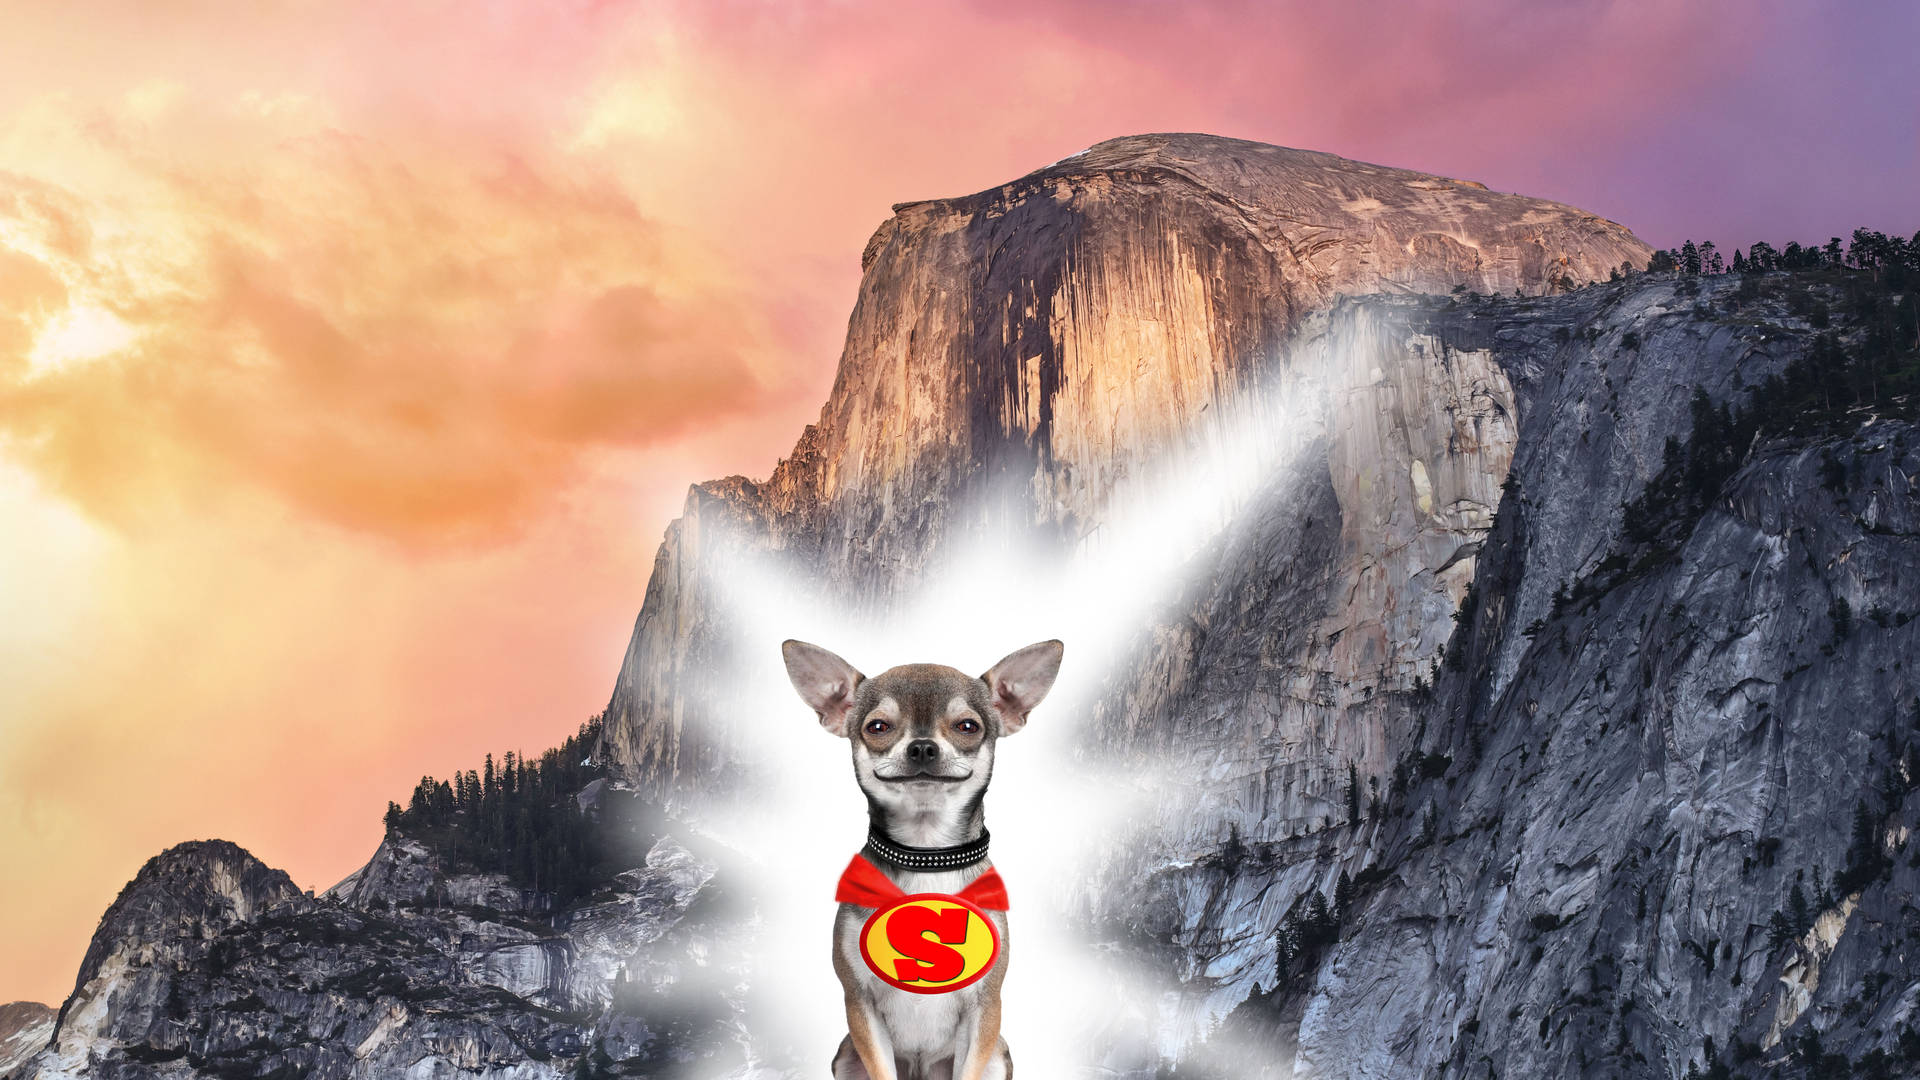 Chihuahua Superhero Poster Background